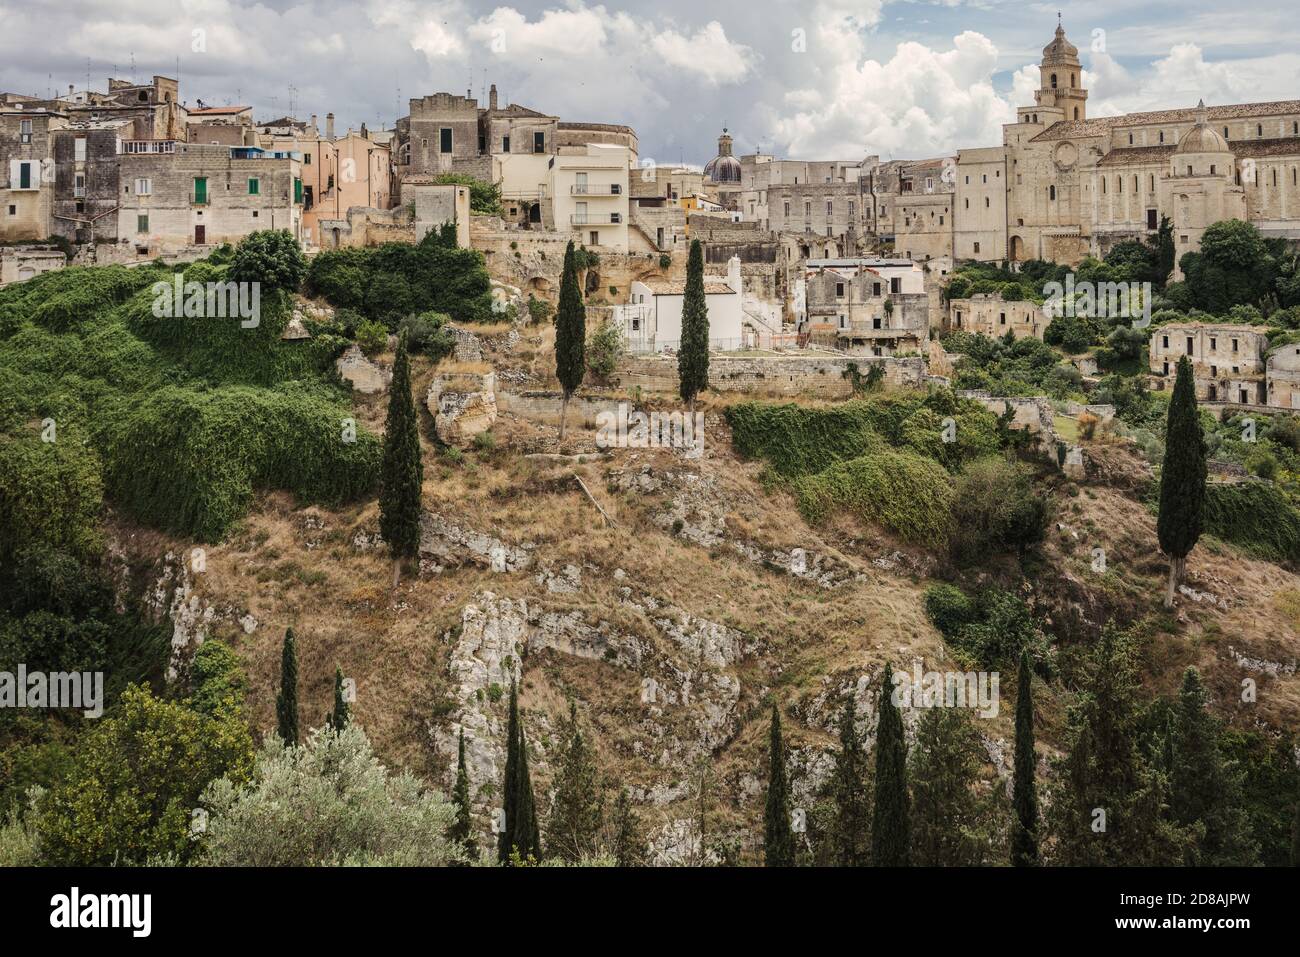 The amazing town of Gravina di Puglia in southern Italy Stock Photo